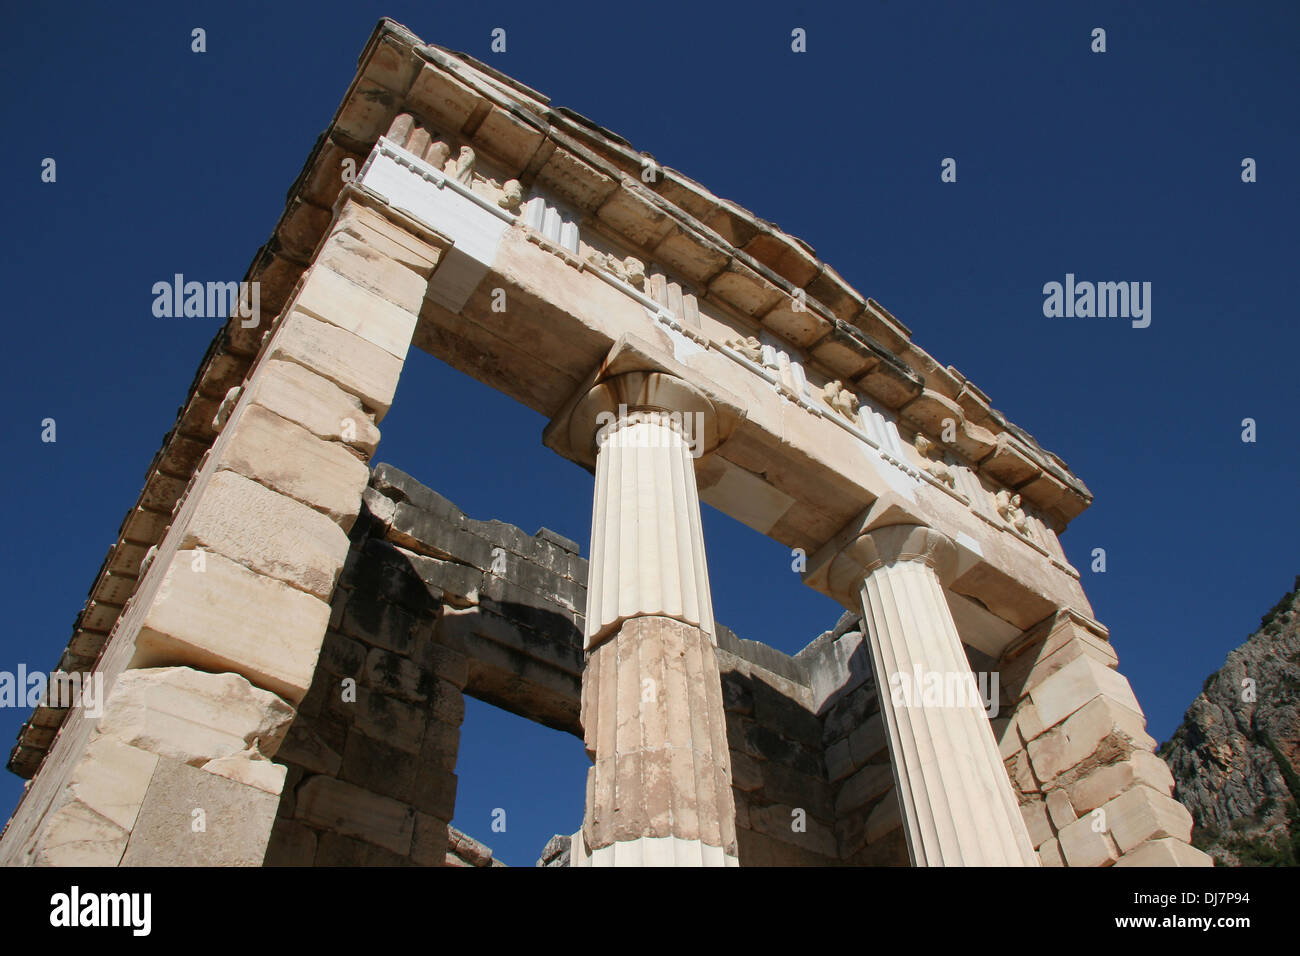 Greece. Delphi. The Athenian Treasury. Doric style. 490 BC. Stock Photo